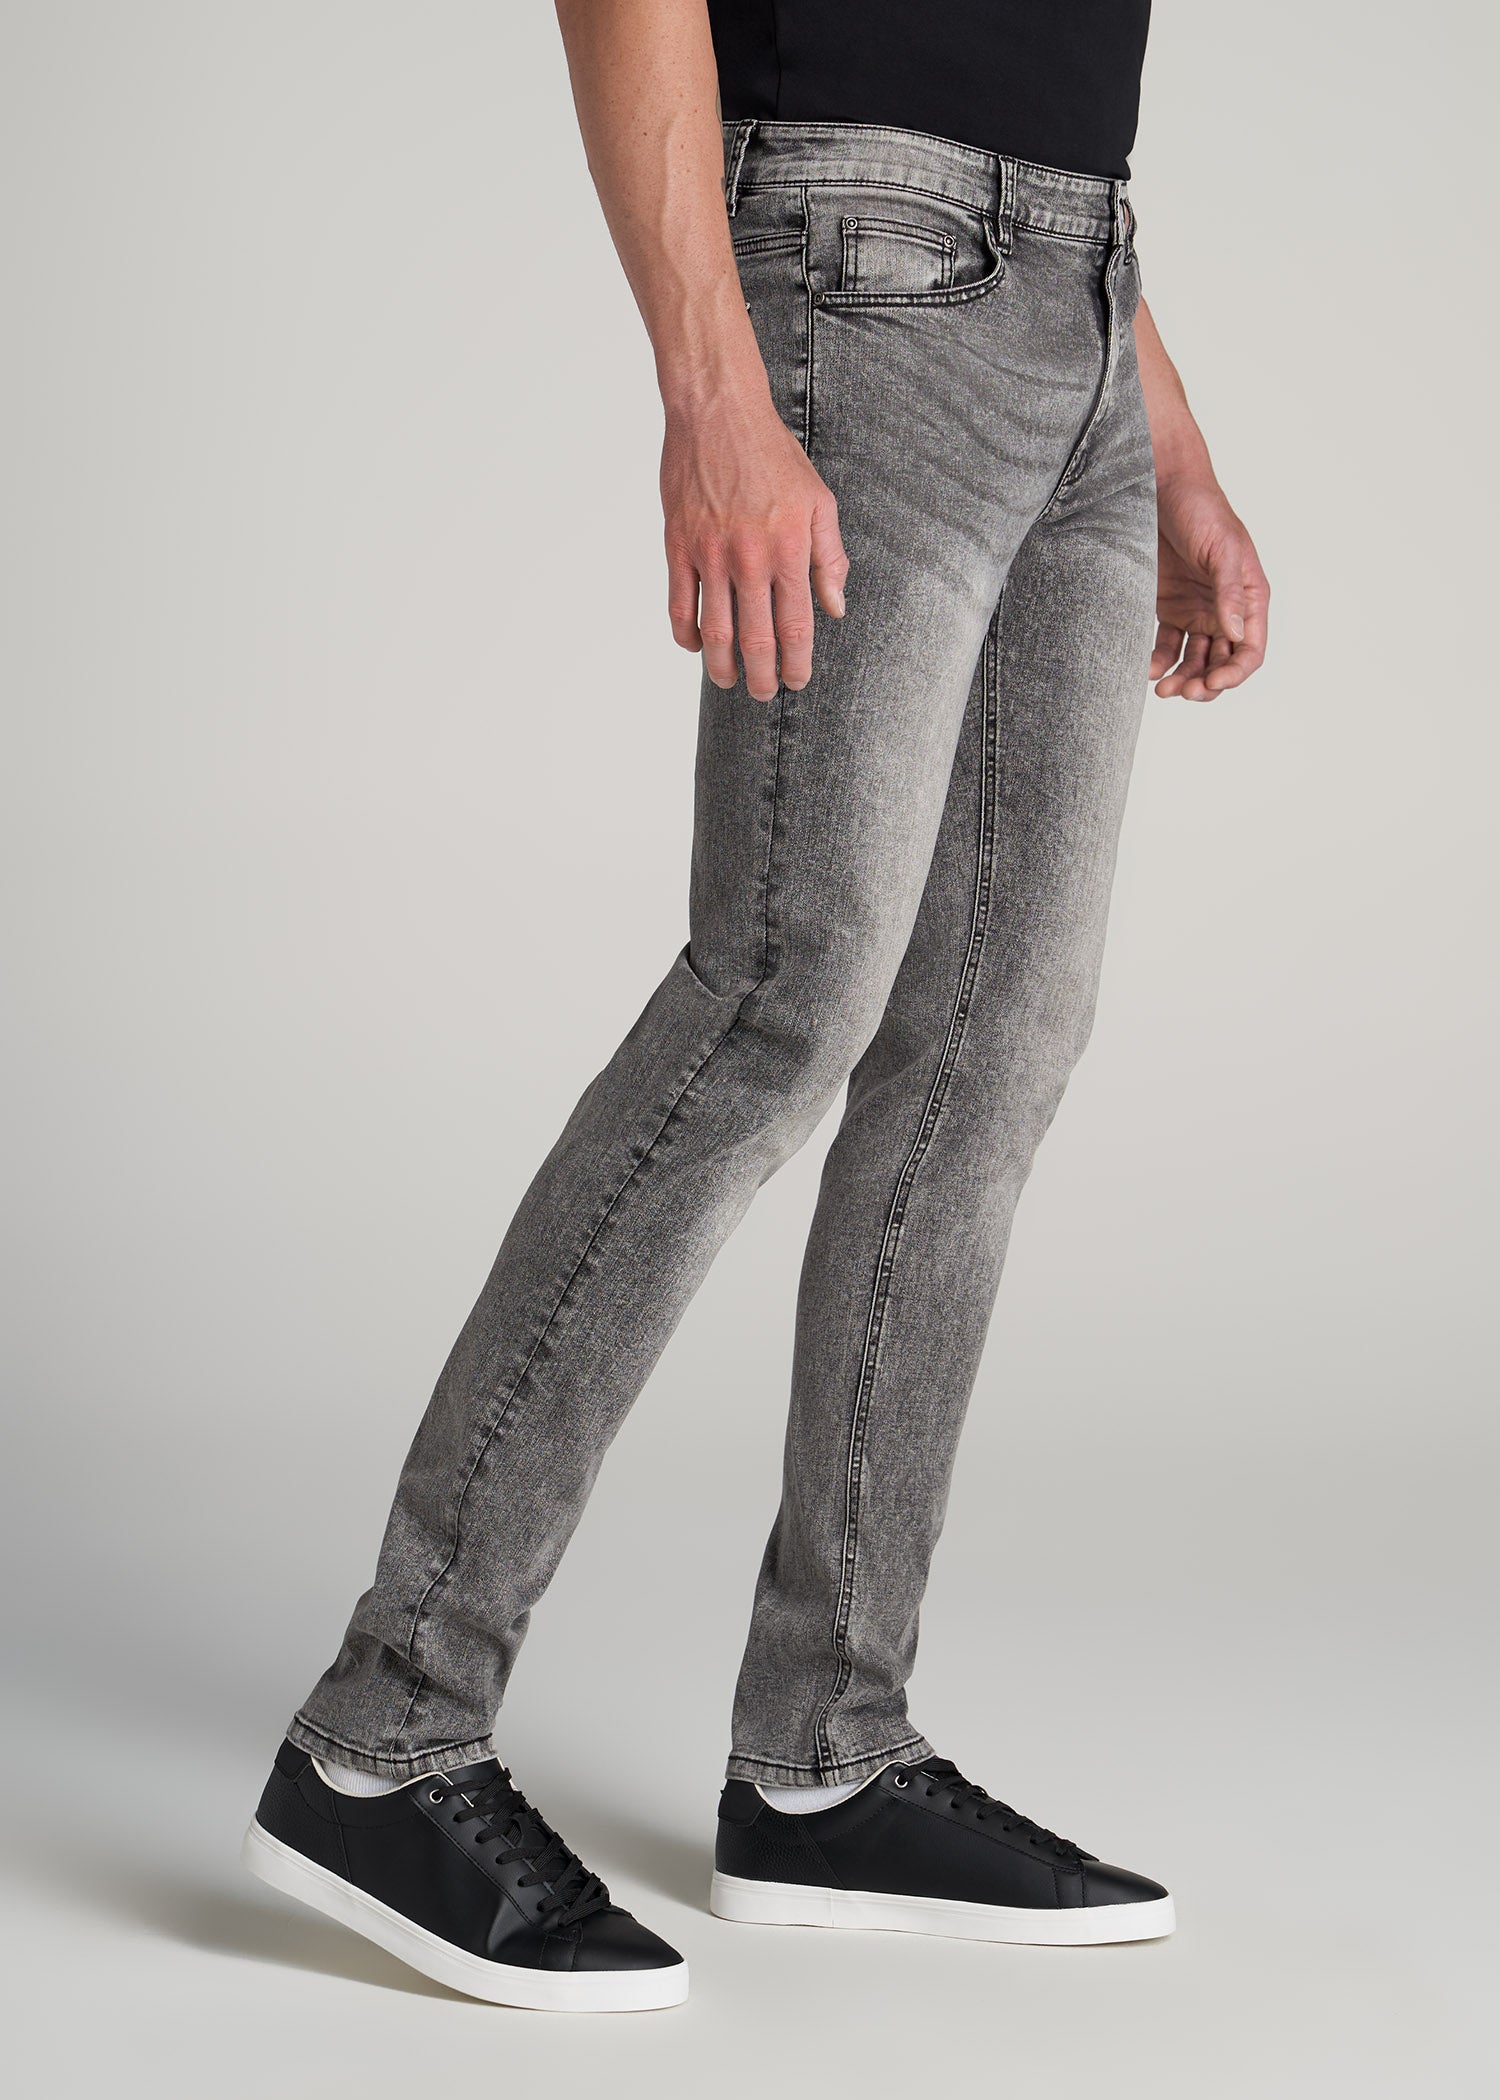 X RAY Skinny Jeans for Boys Slim Fit Denim Pants, Jet Black - Minor Rips,  Size 14 - Walmart.com